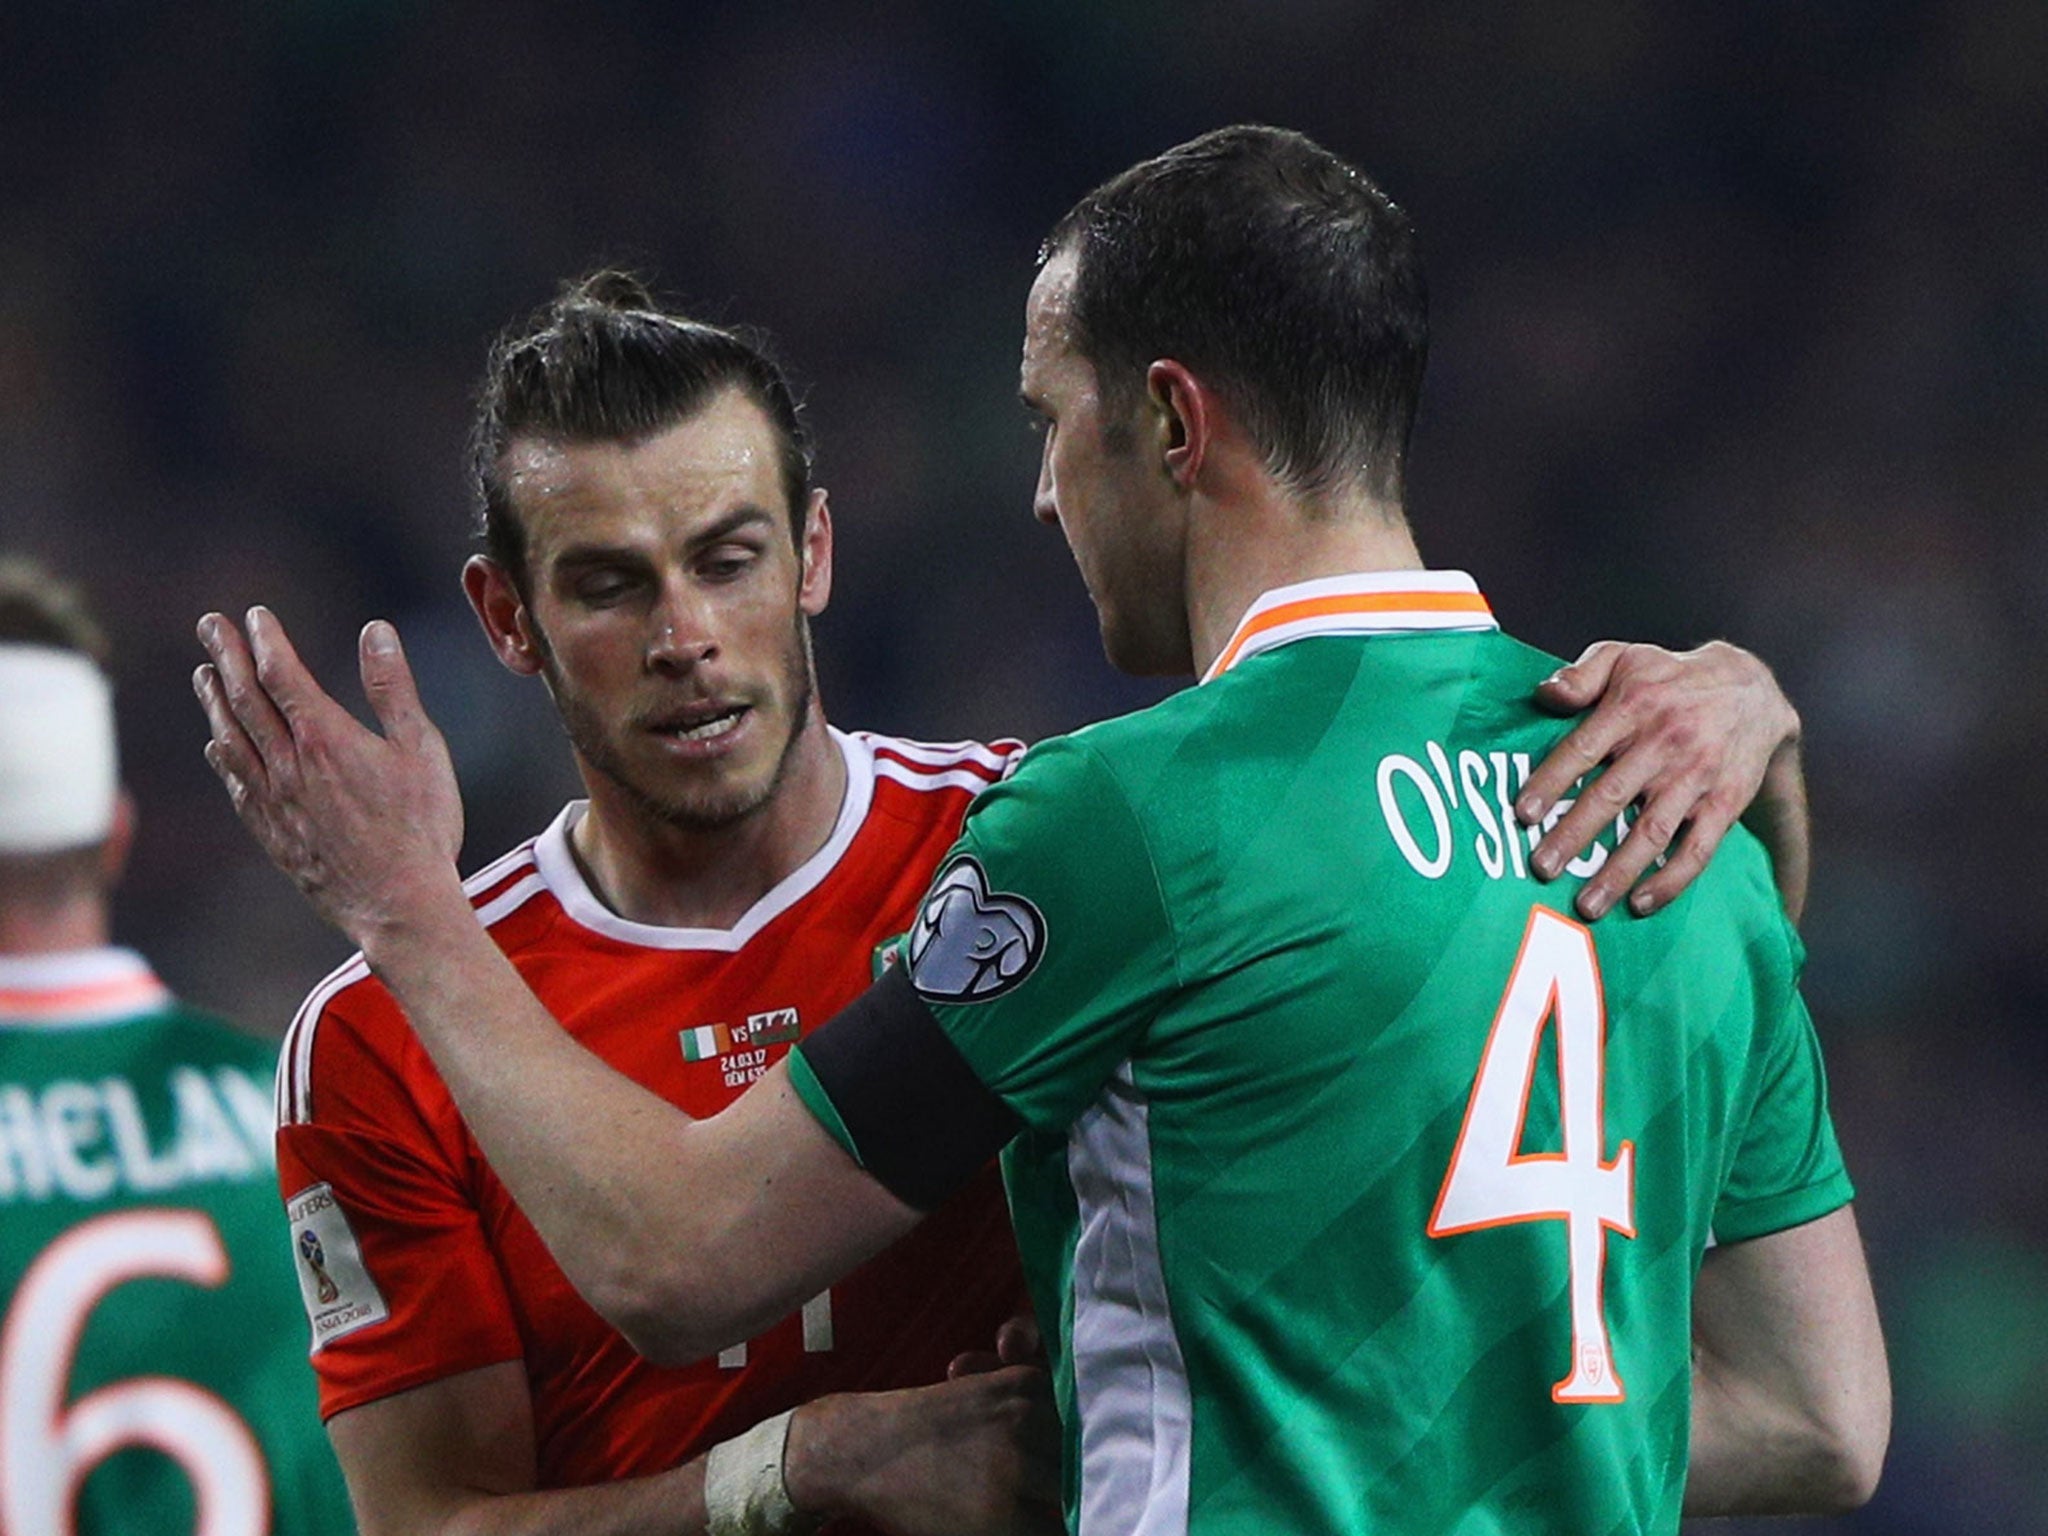 Gareth Bale and John O'Shea clashed during the game